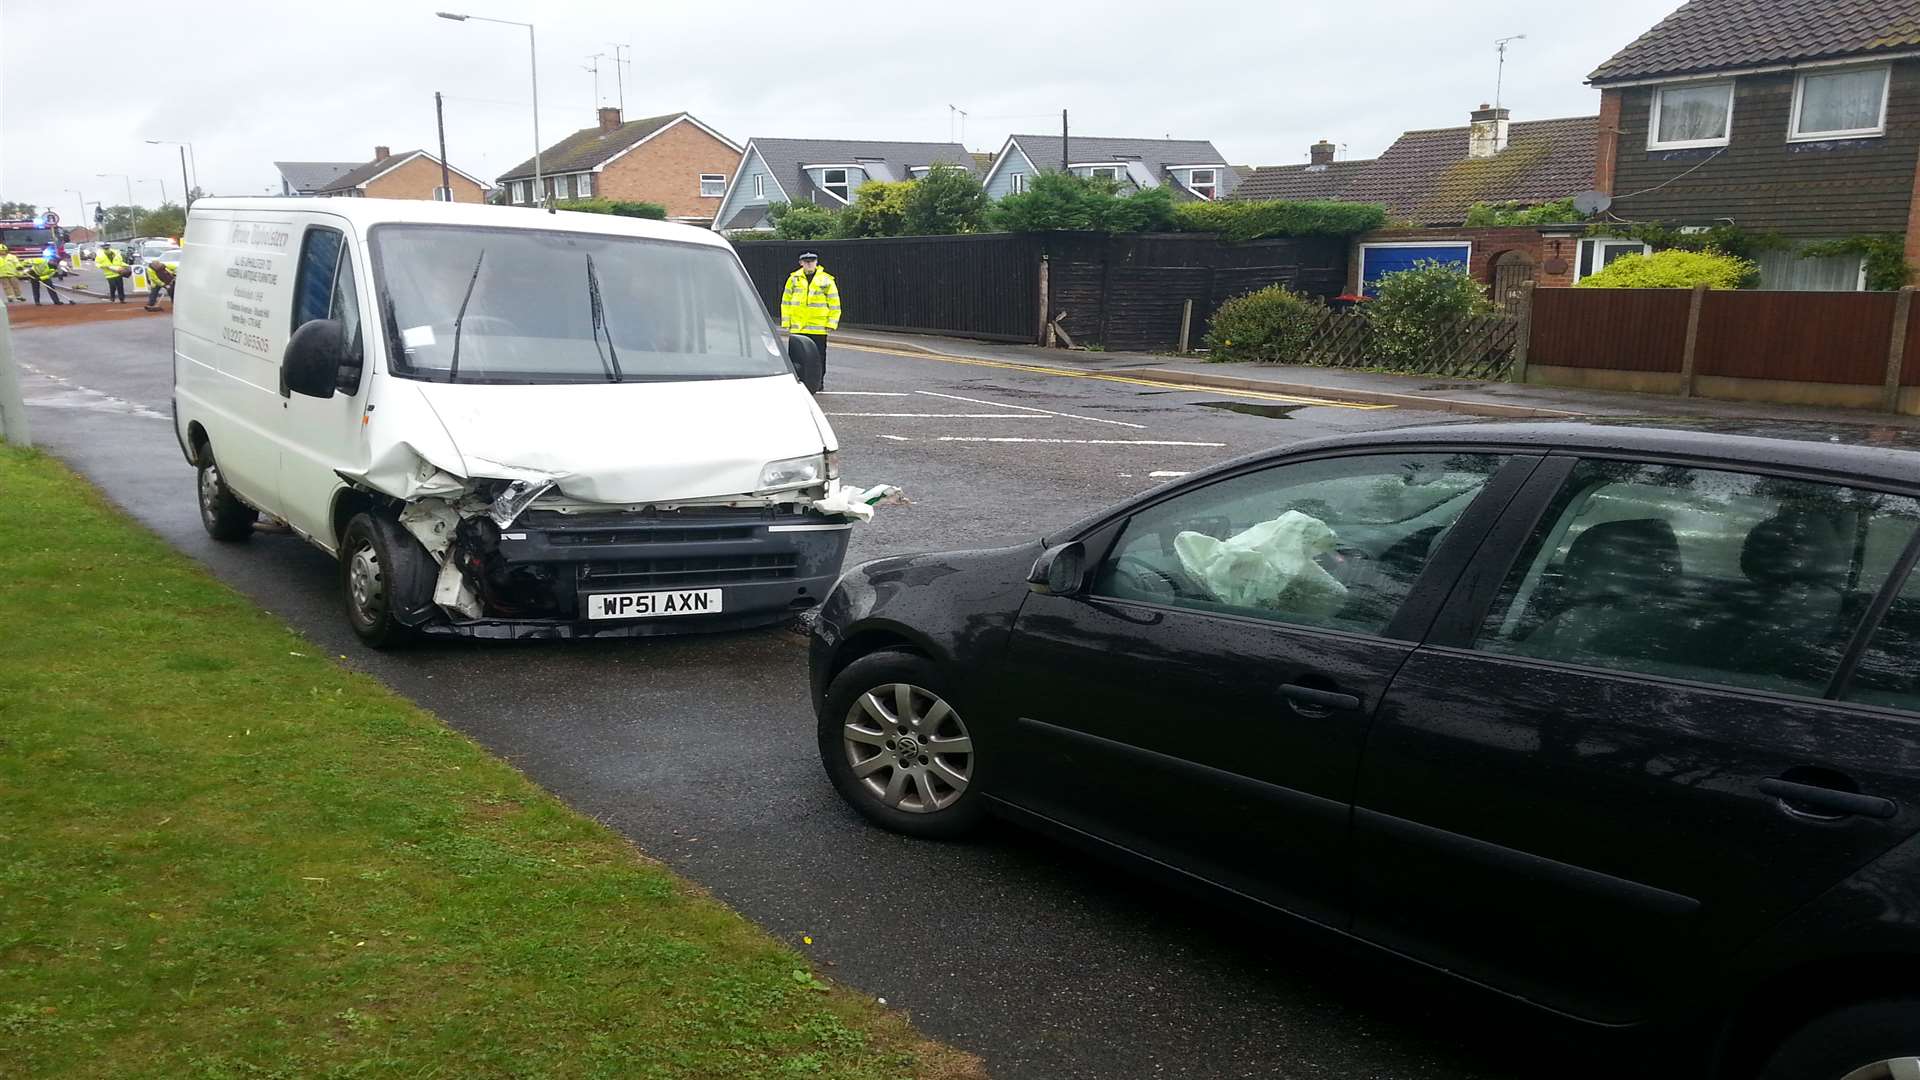 The crash involved a VW Golf and Fiat van